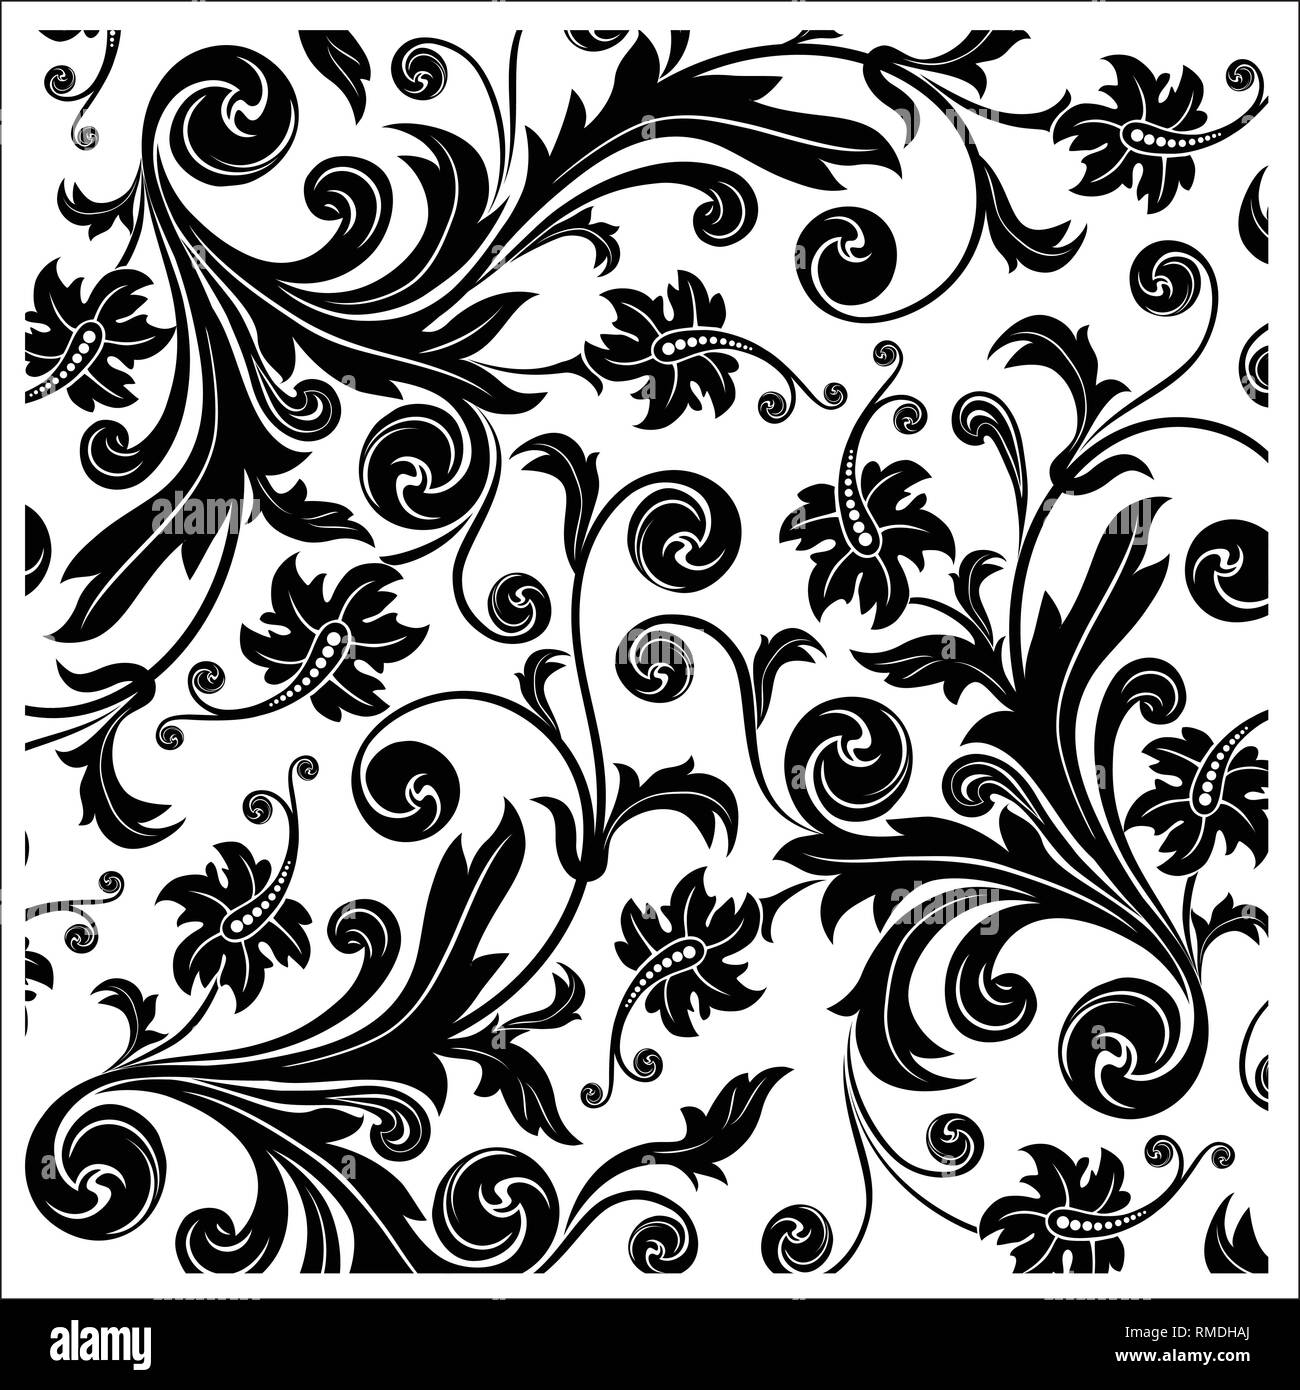 Fabric Design Patterns Black And White - Pattern Design Ideas